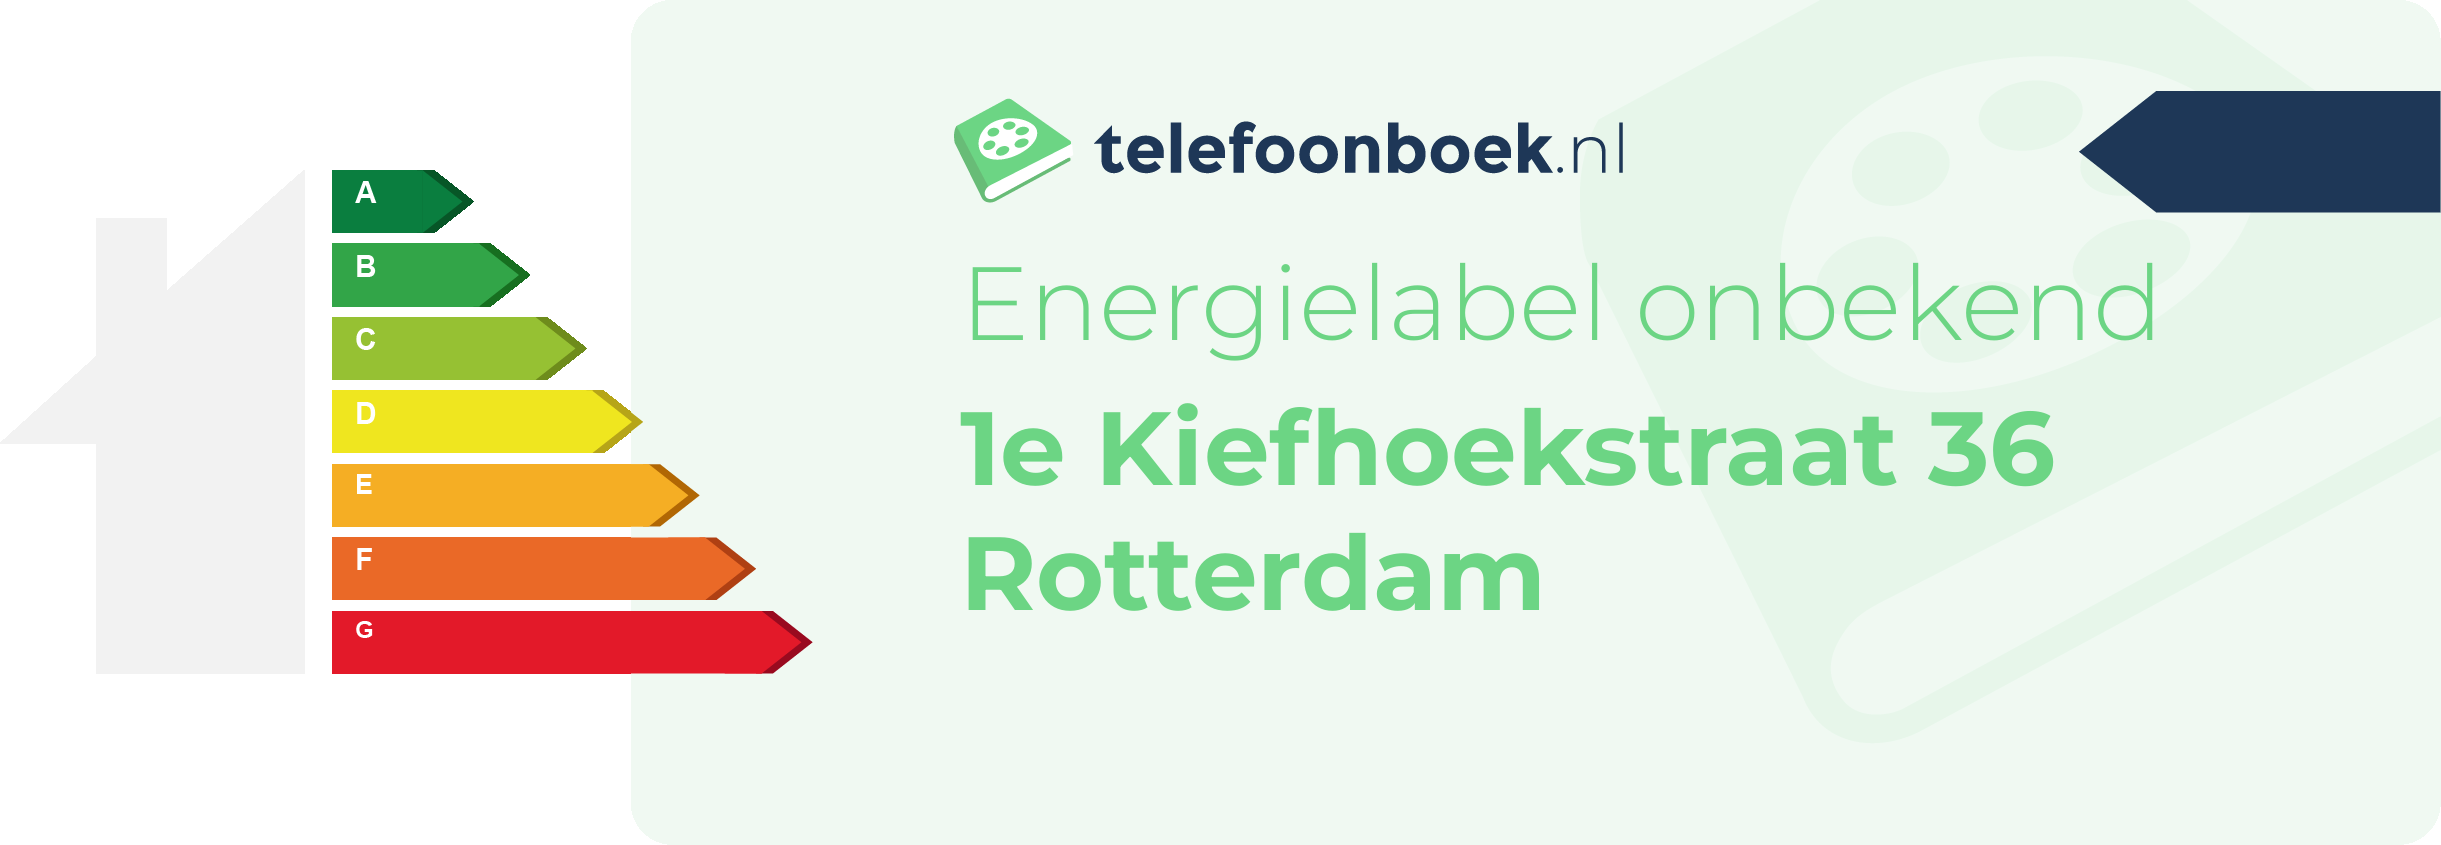 Energielabel 1e Kiefhoekstraat 36 Rotterdam